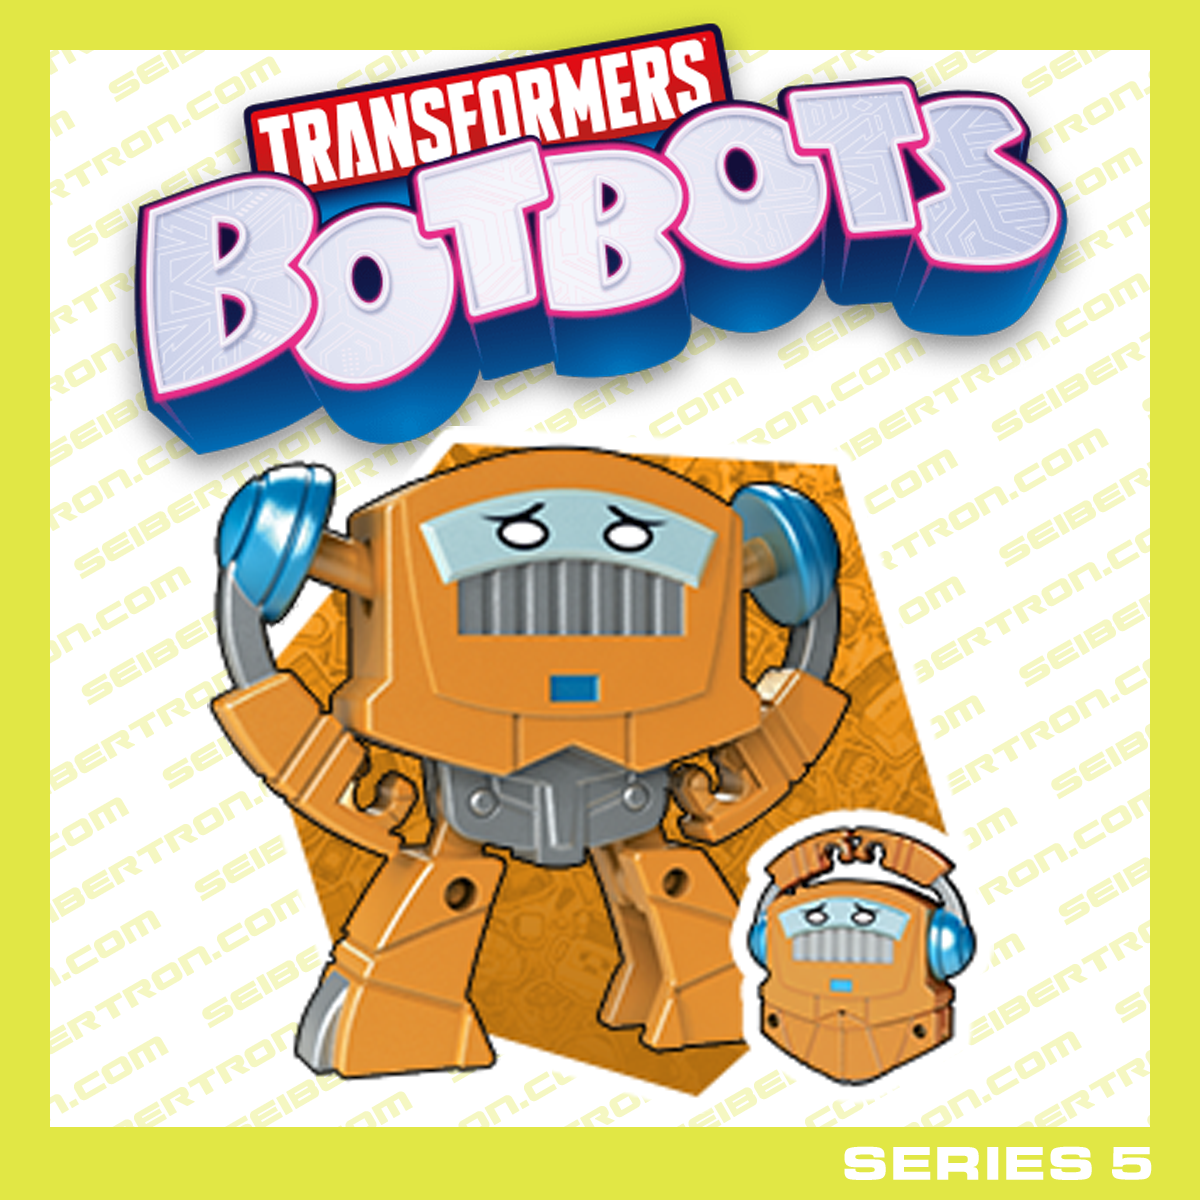 SKIPPY DIPPY DISC Transformers BotBots Series 5 Retro Replays CD discman 2020